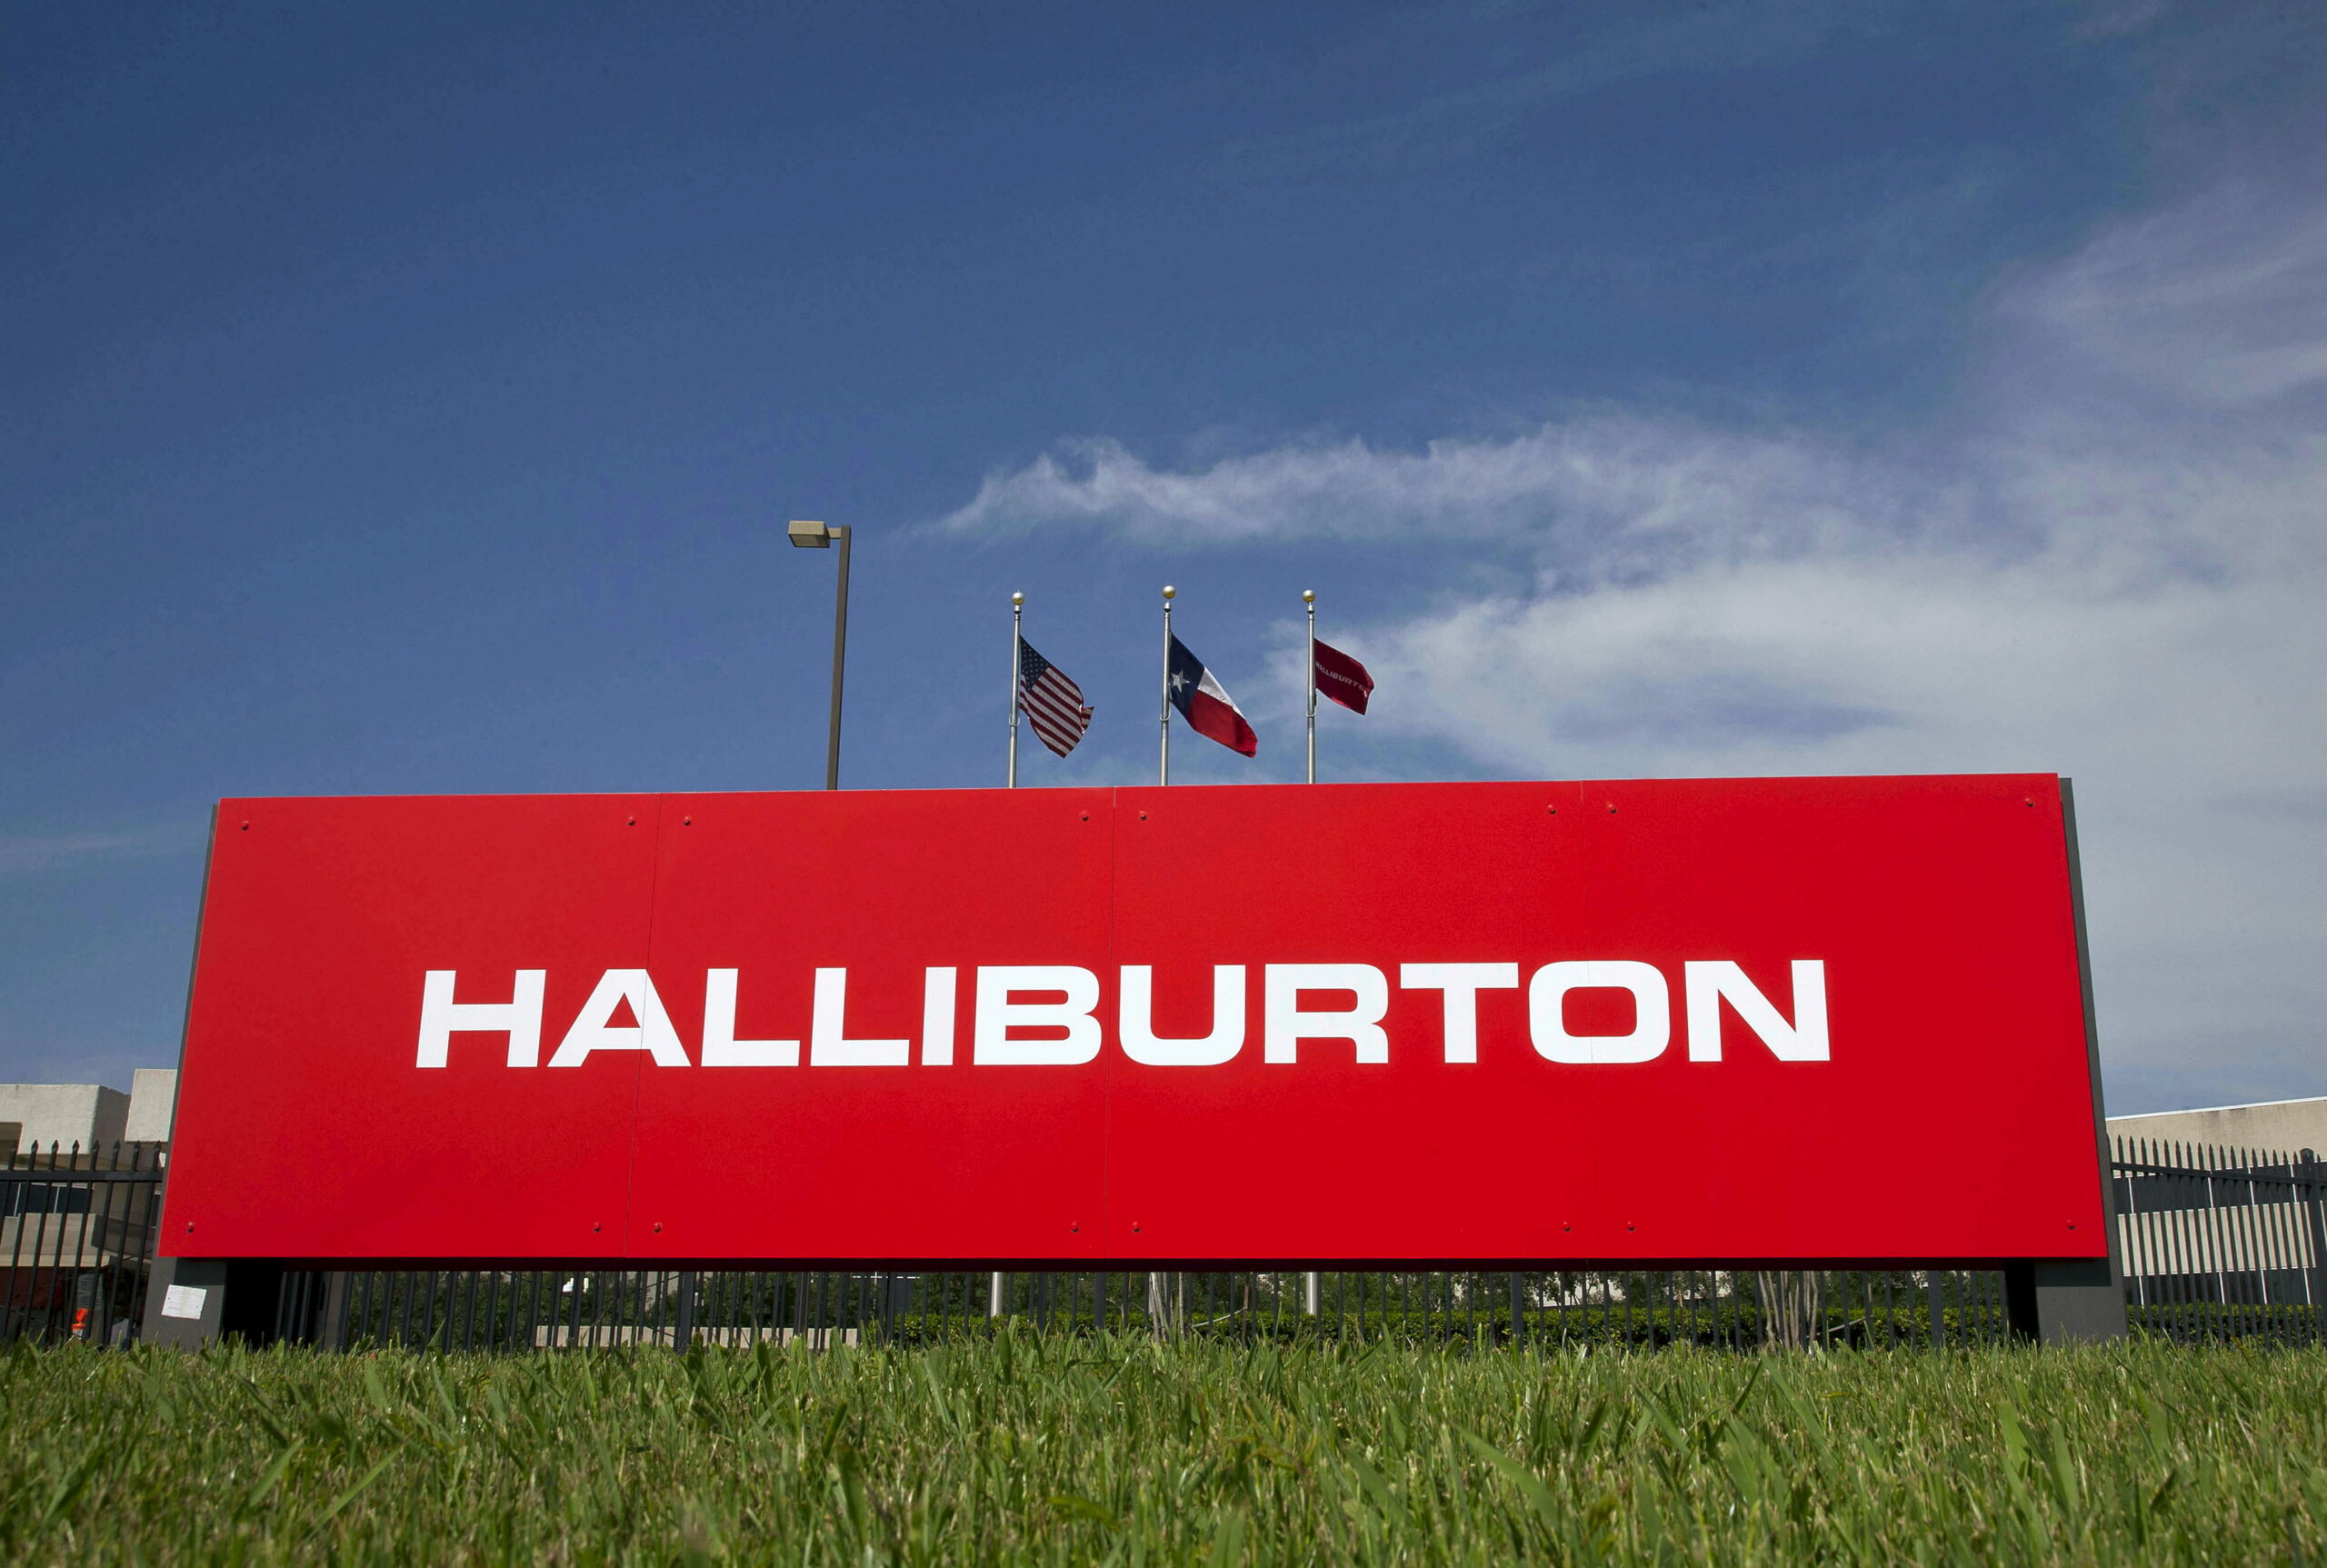 Halliburton jobs hiring in UAE in Dubai and abu dhabi for all nationalities